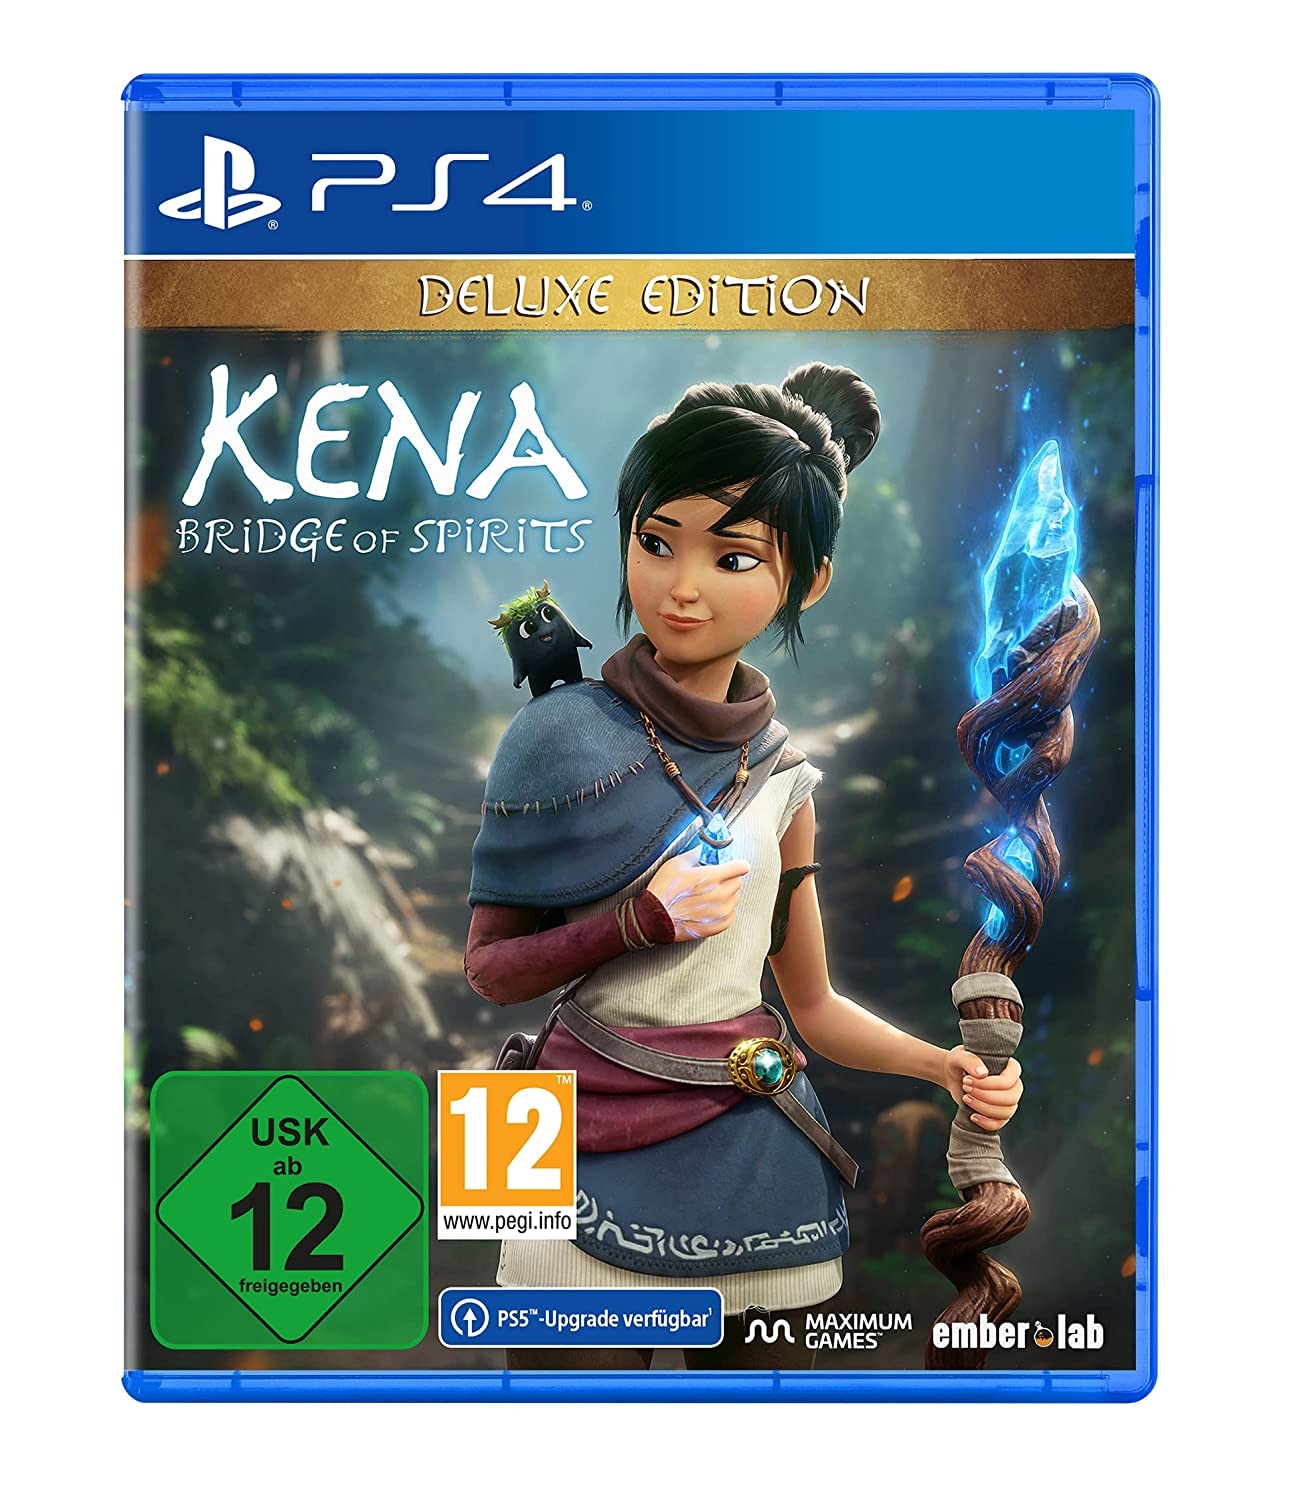 Astragon Spielesoftware Edition«, of Deluxe - Spirits 4 bei Bridge »Kena: PlayStation